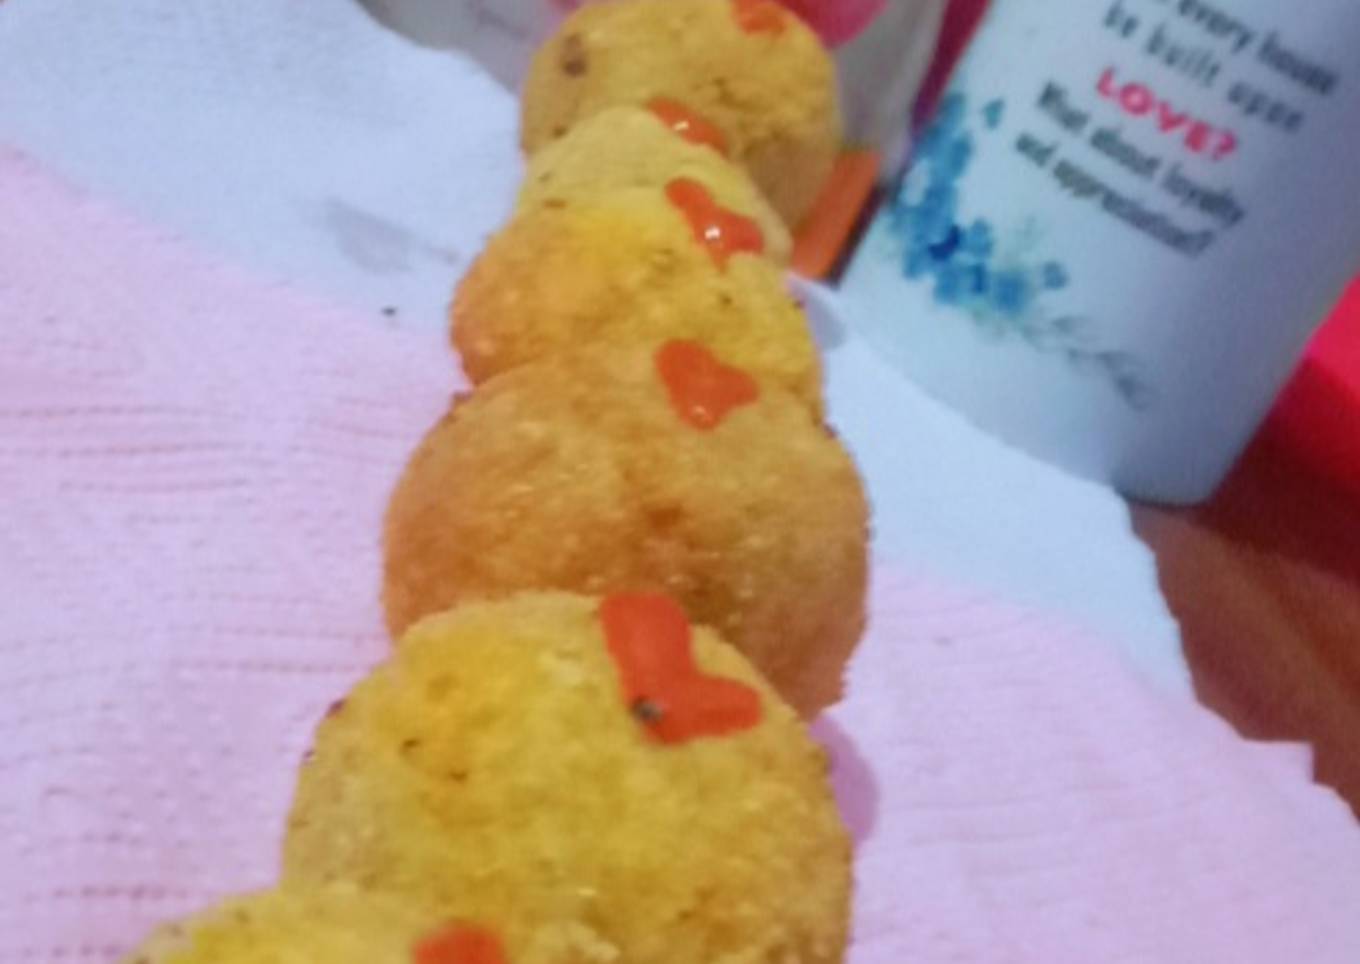 Potato chicken cheese 🧀 balls